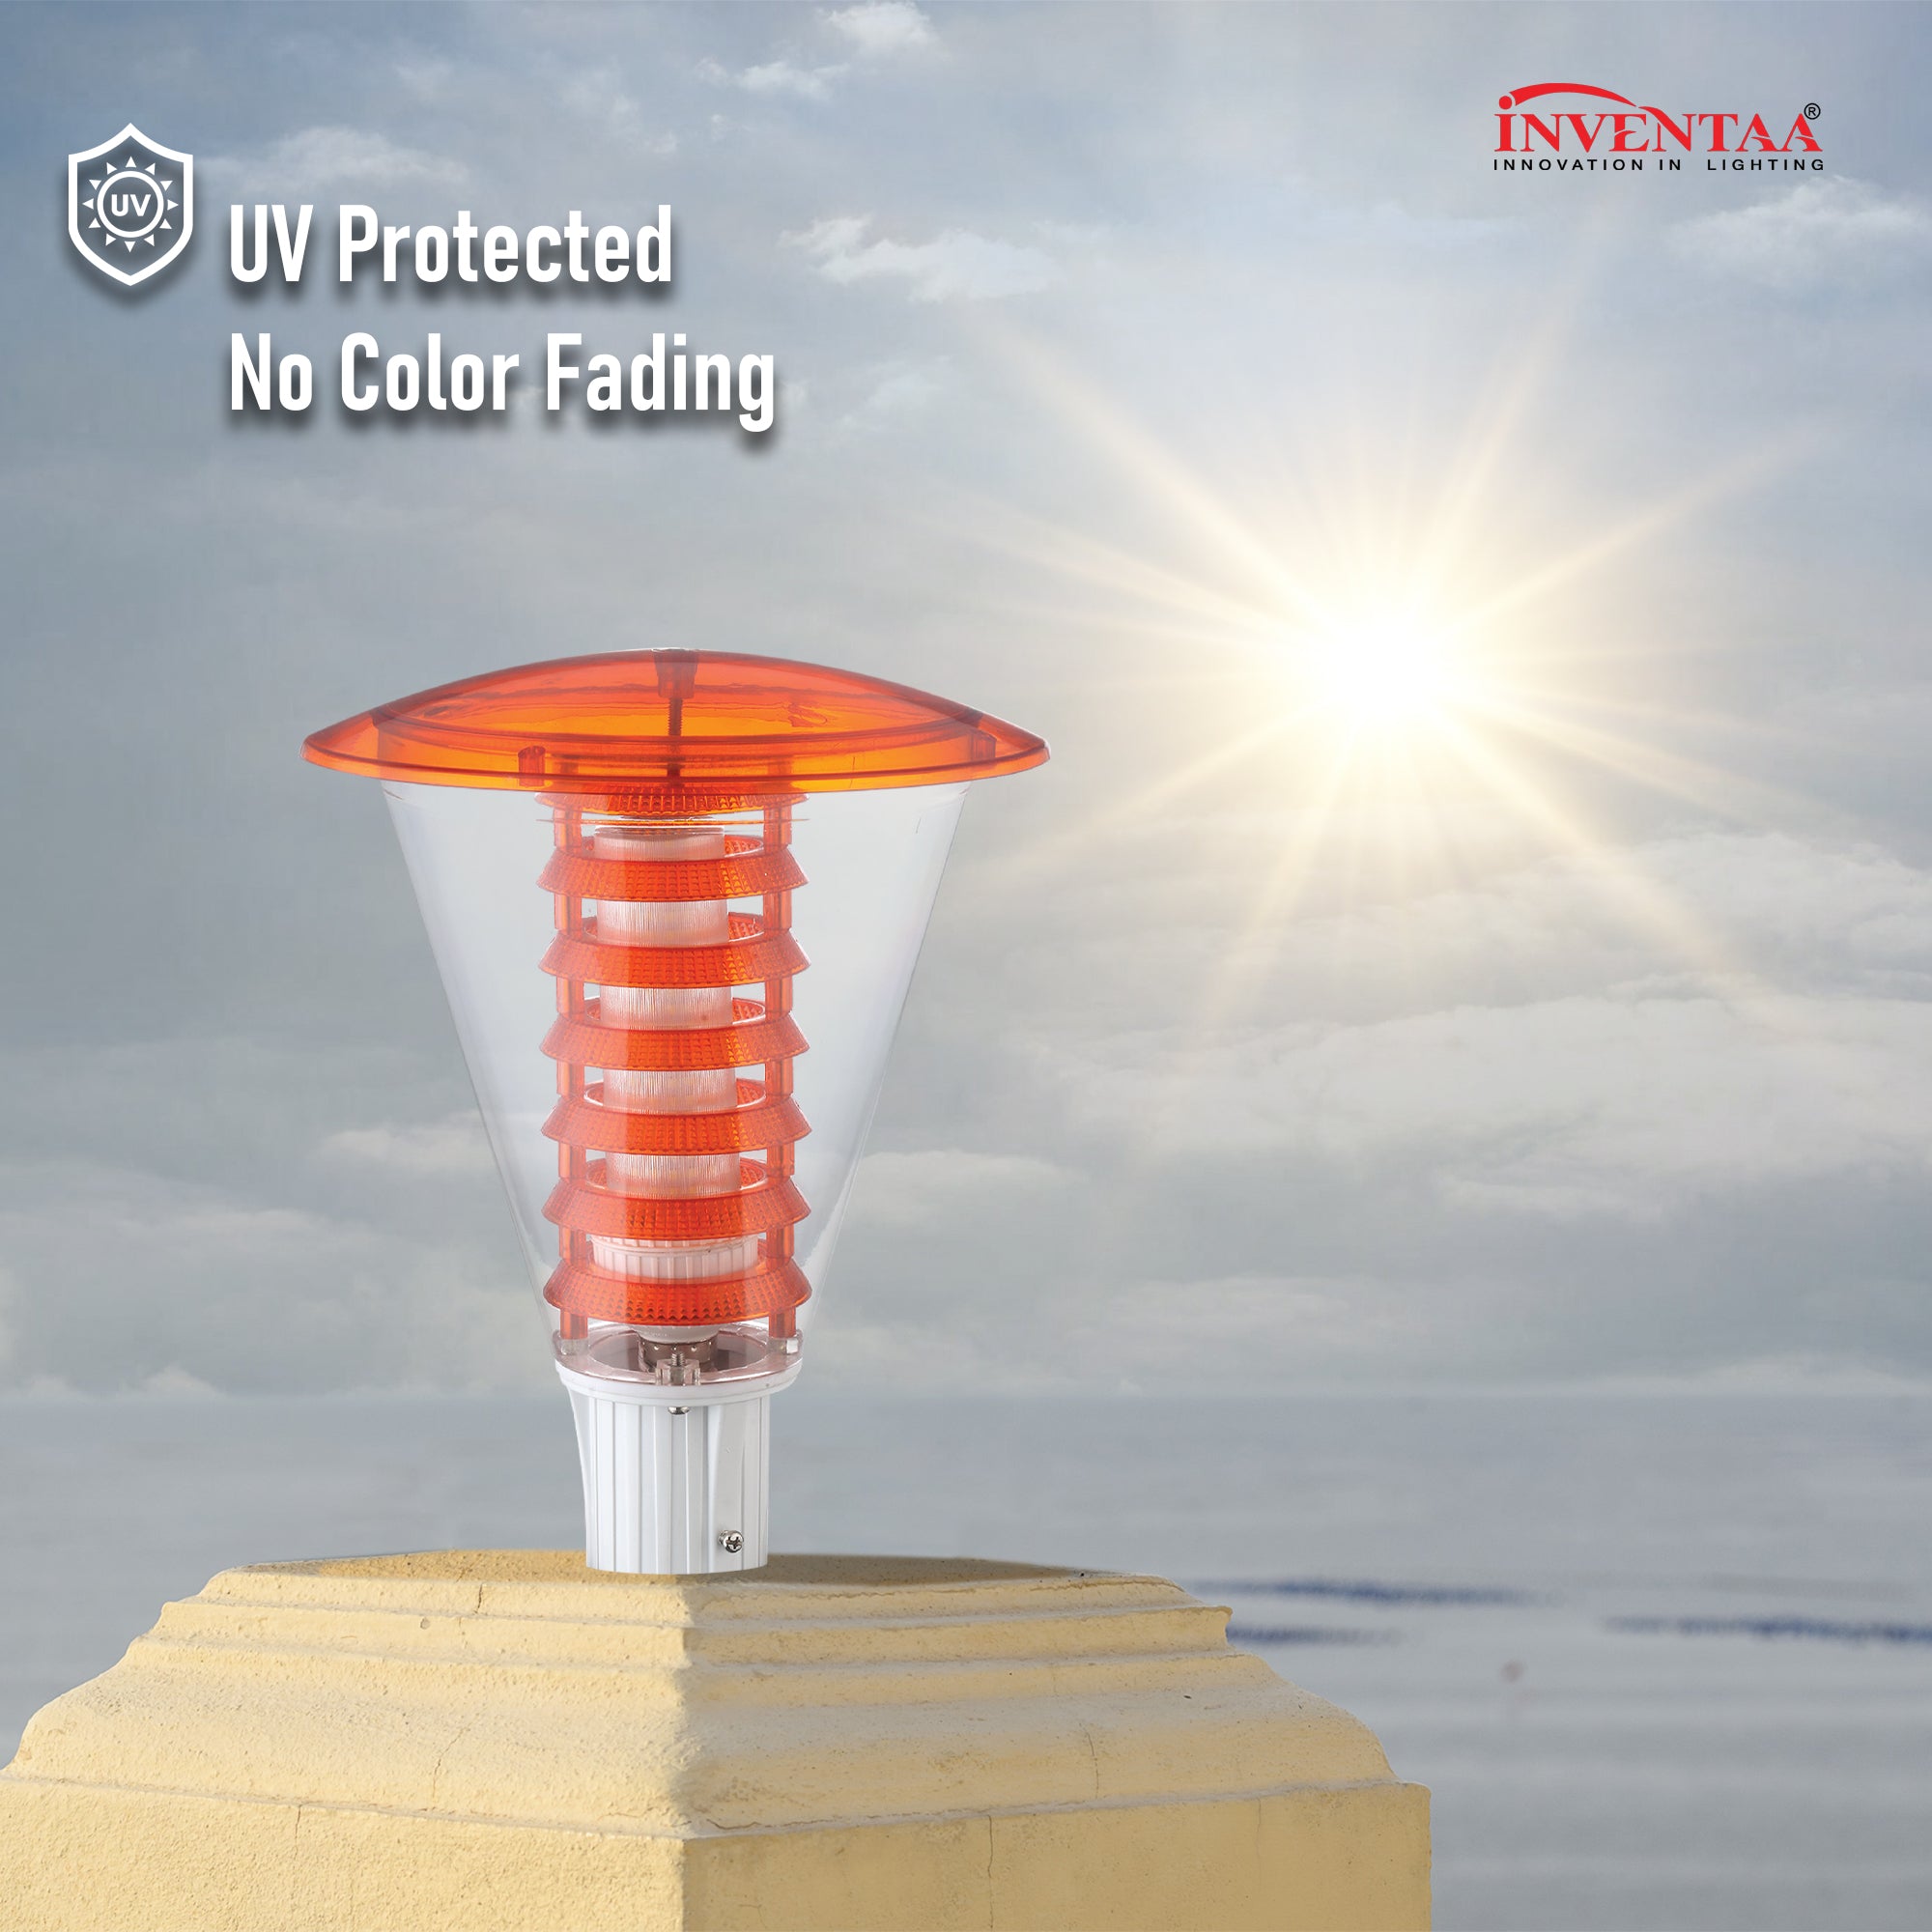 UV Protected Big Olivia LED Gate Light For Gate Pillars #bulb options_warm